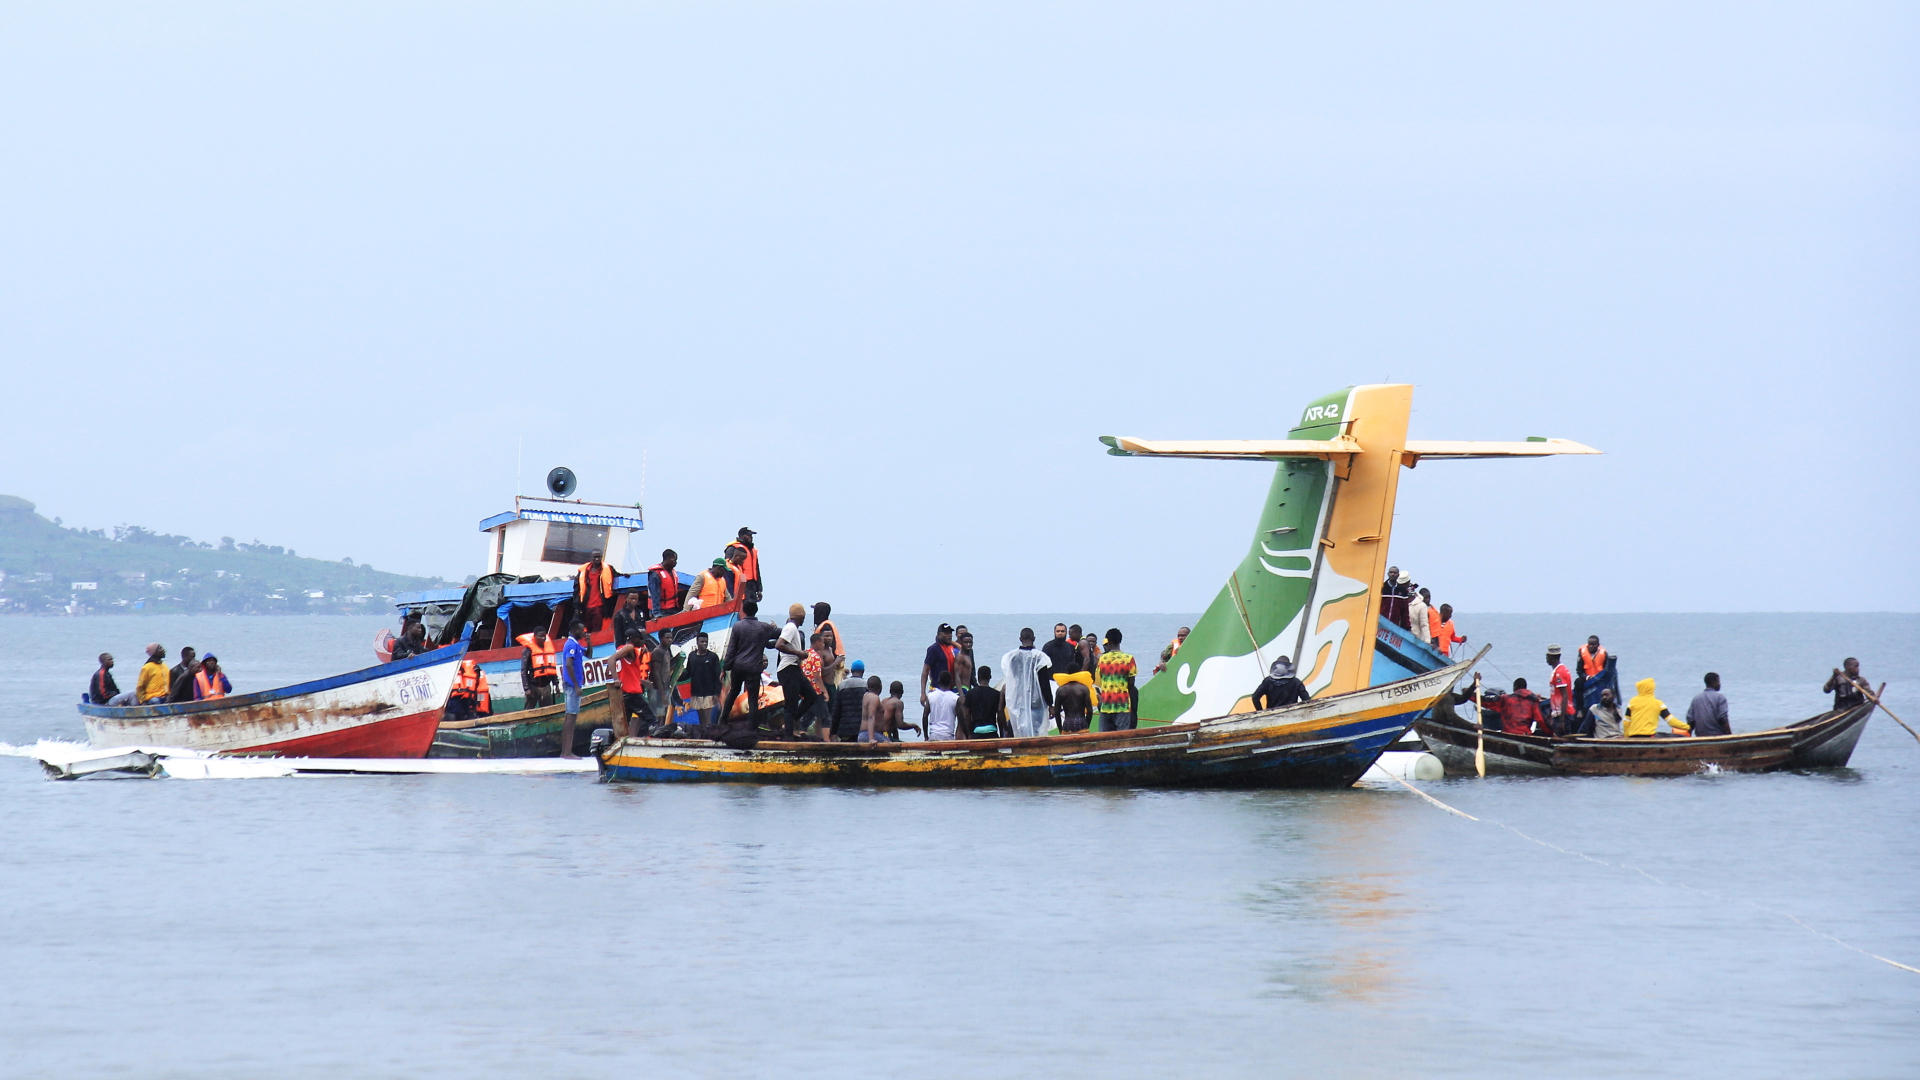 Bencana di Tanzania: Pesawat menabrak Danau Victoria